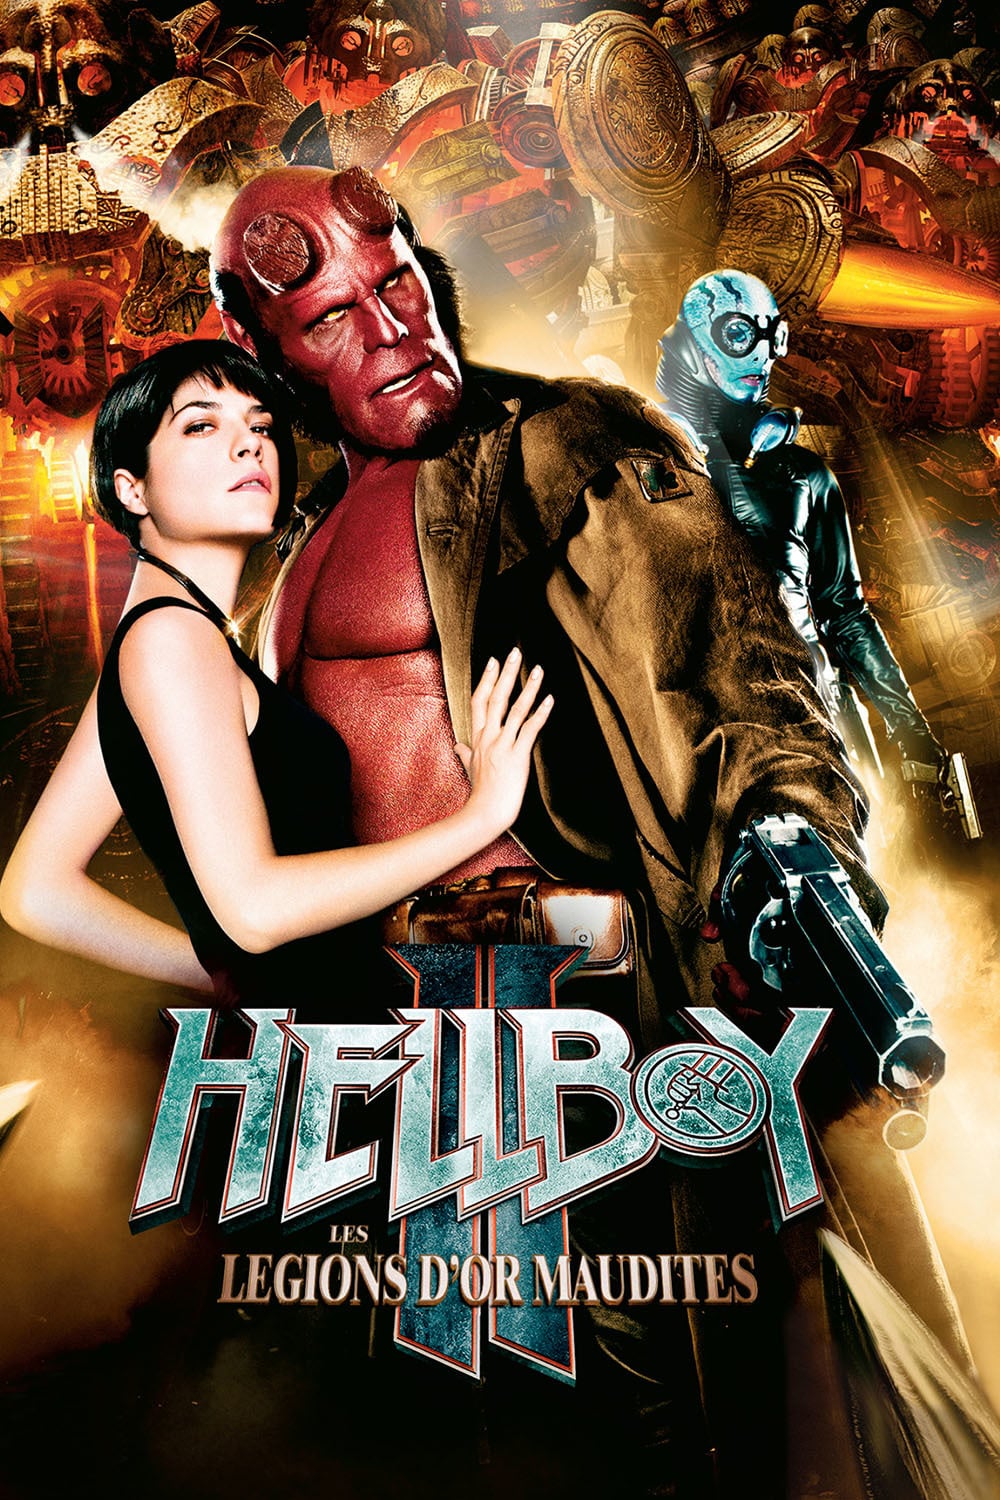 Affiche du film "Hellboy II : Les Légions d'or maudites"